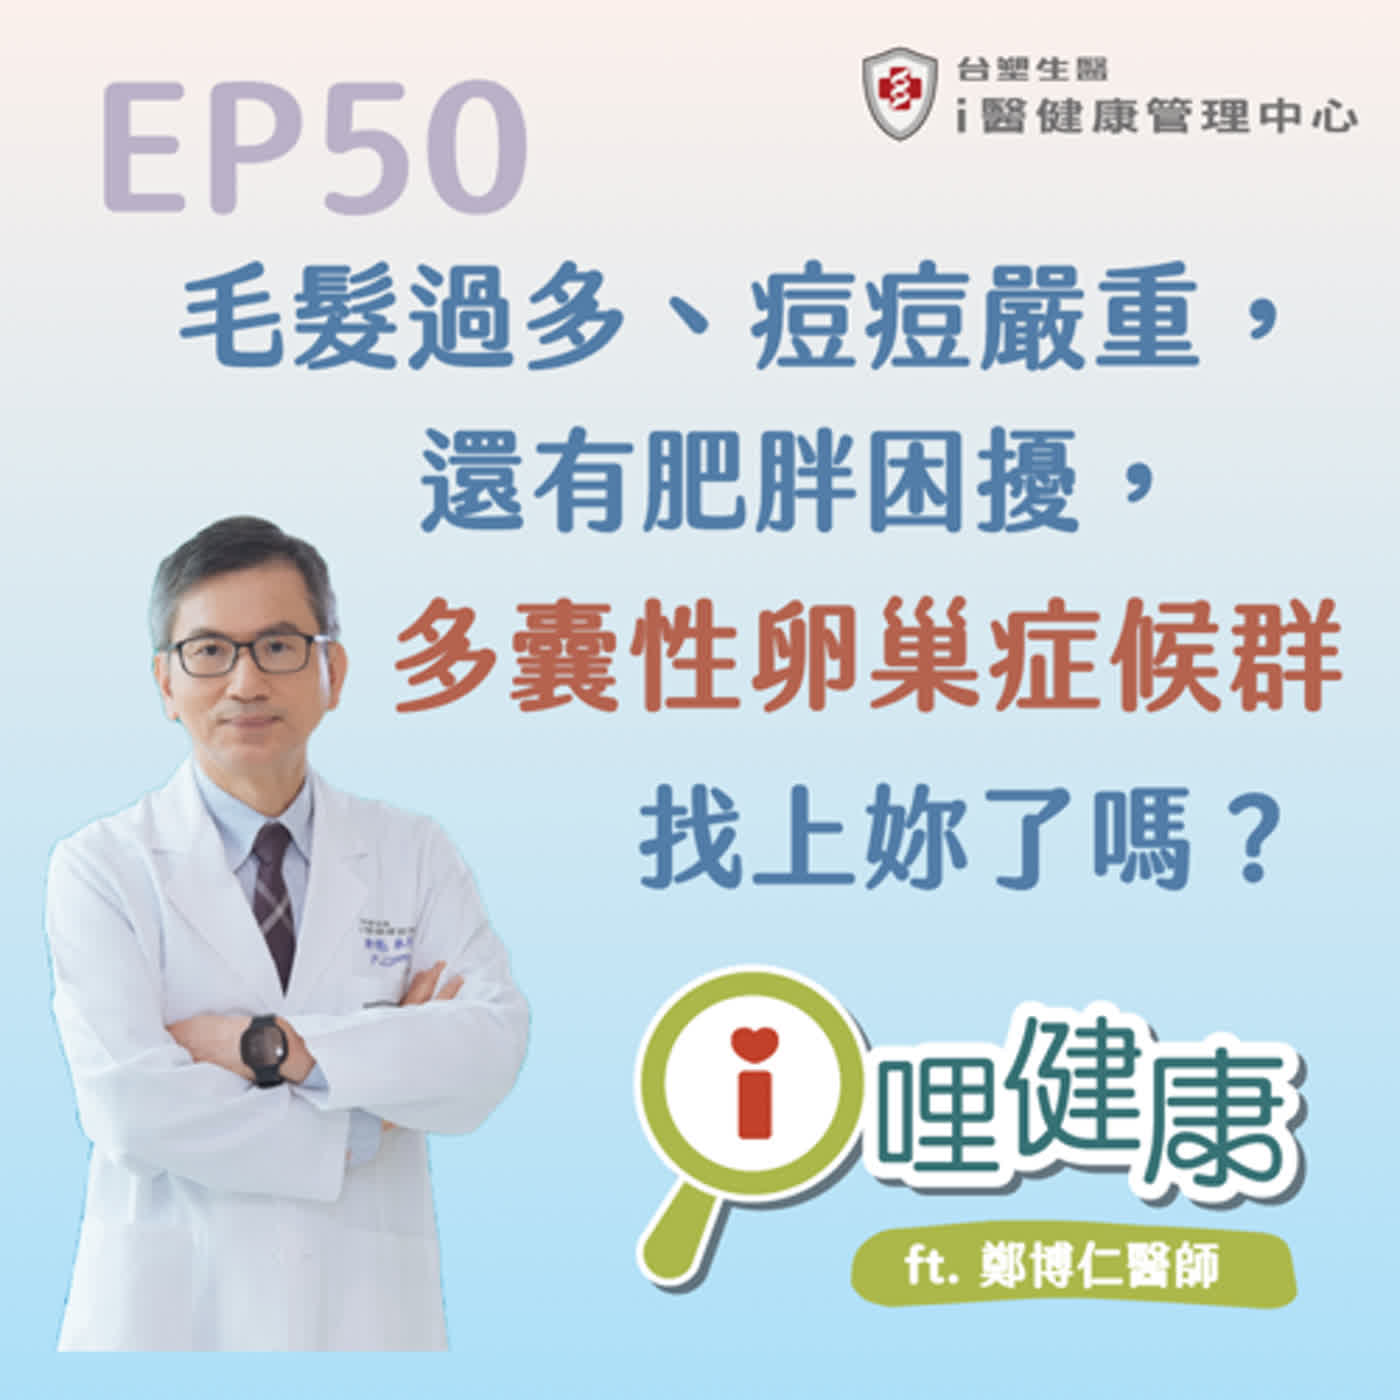 EP50 | 毛髮過多、痘痘嚴重還有肥胖困擾，原來是多囊性卵巢症候群造成！ ft. 鄭博仁醫師